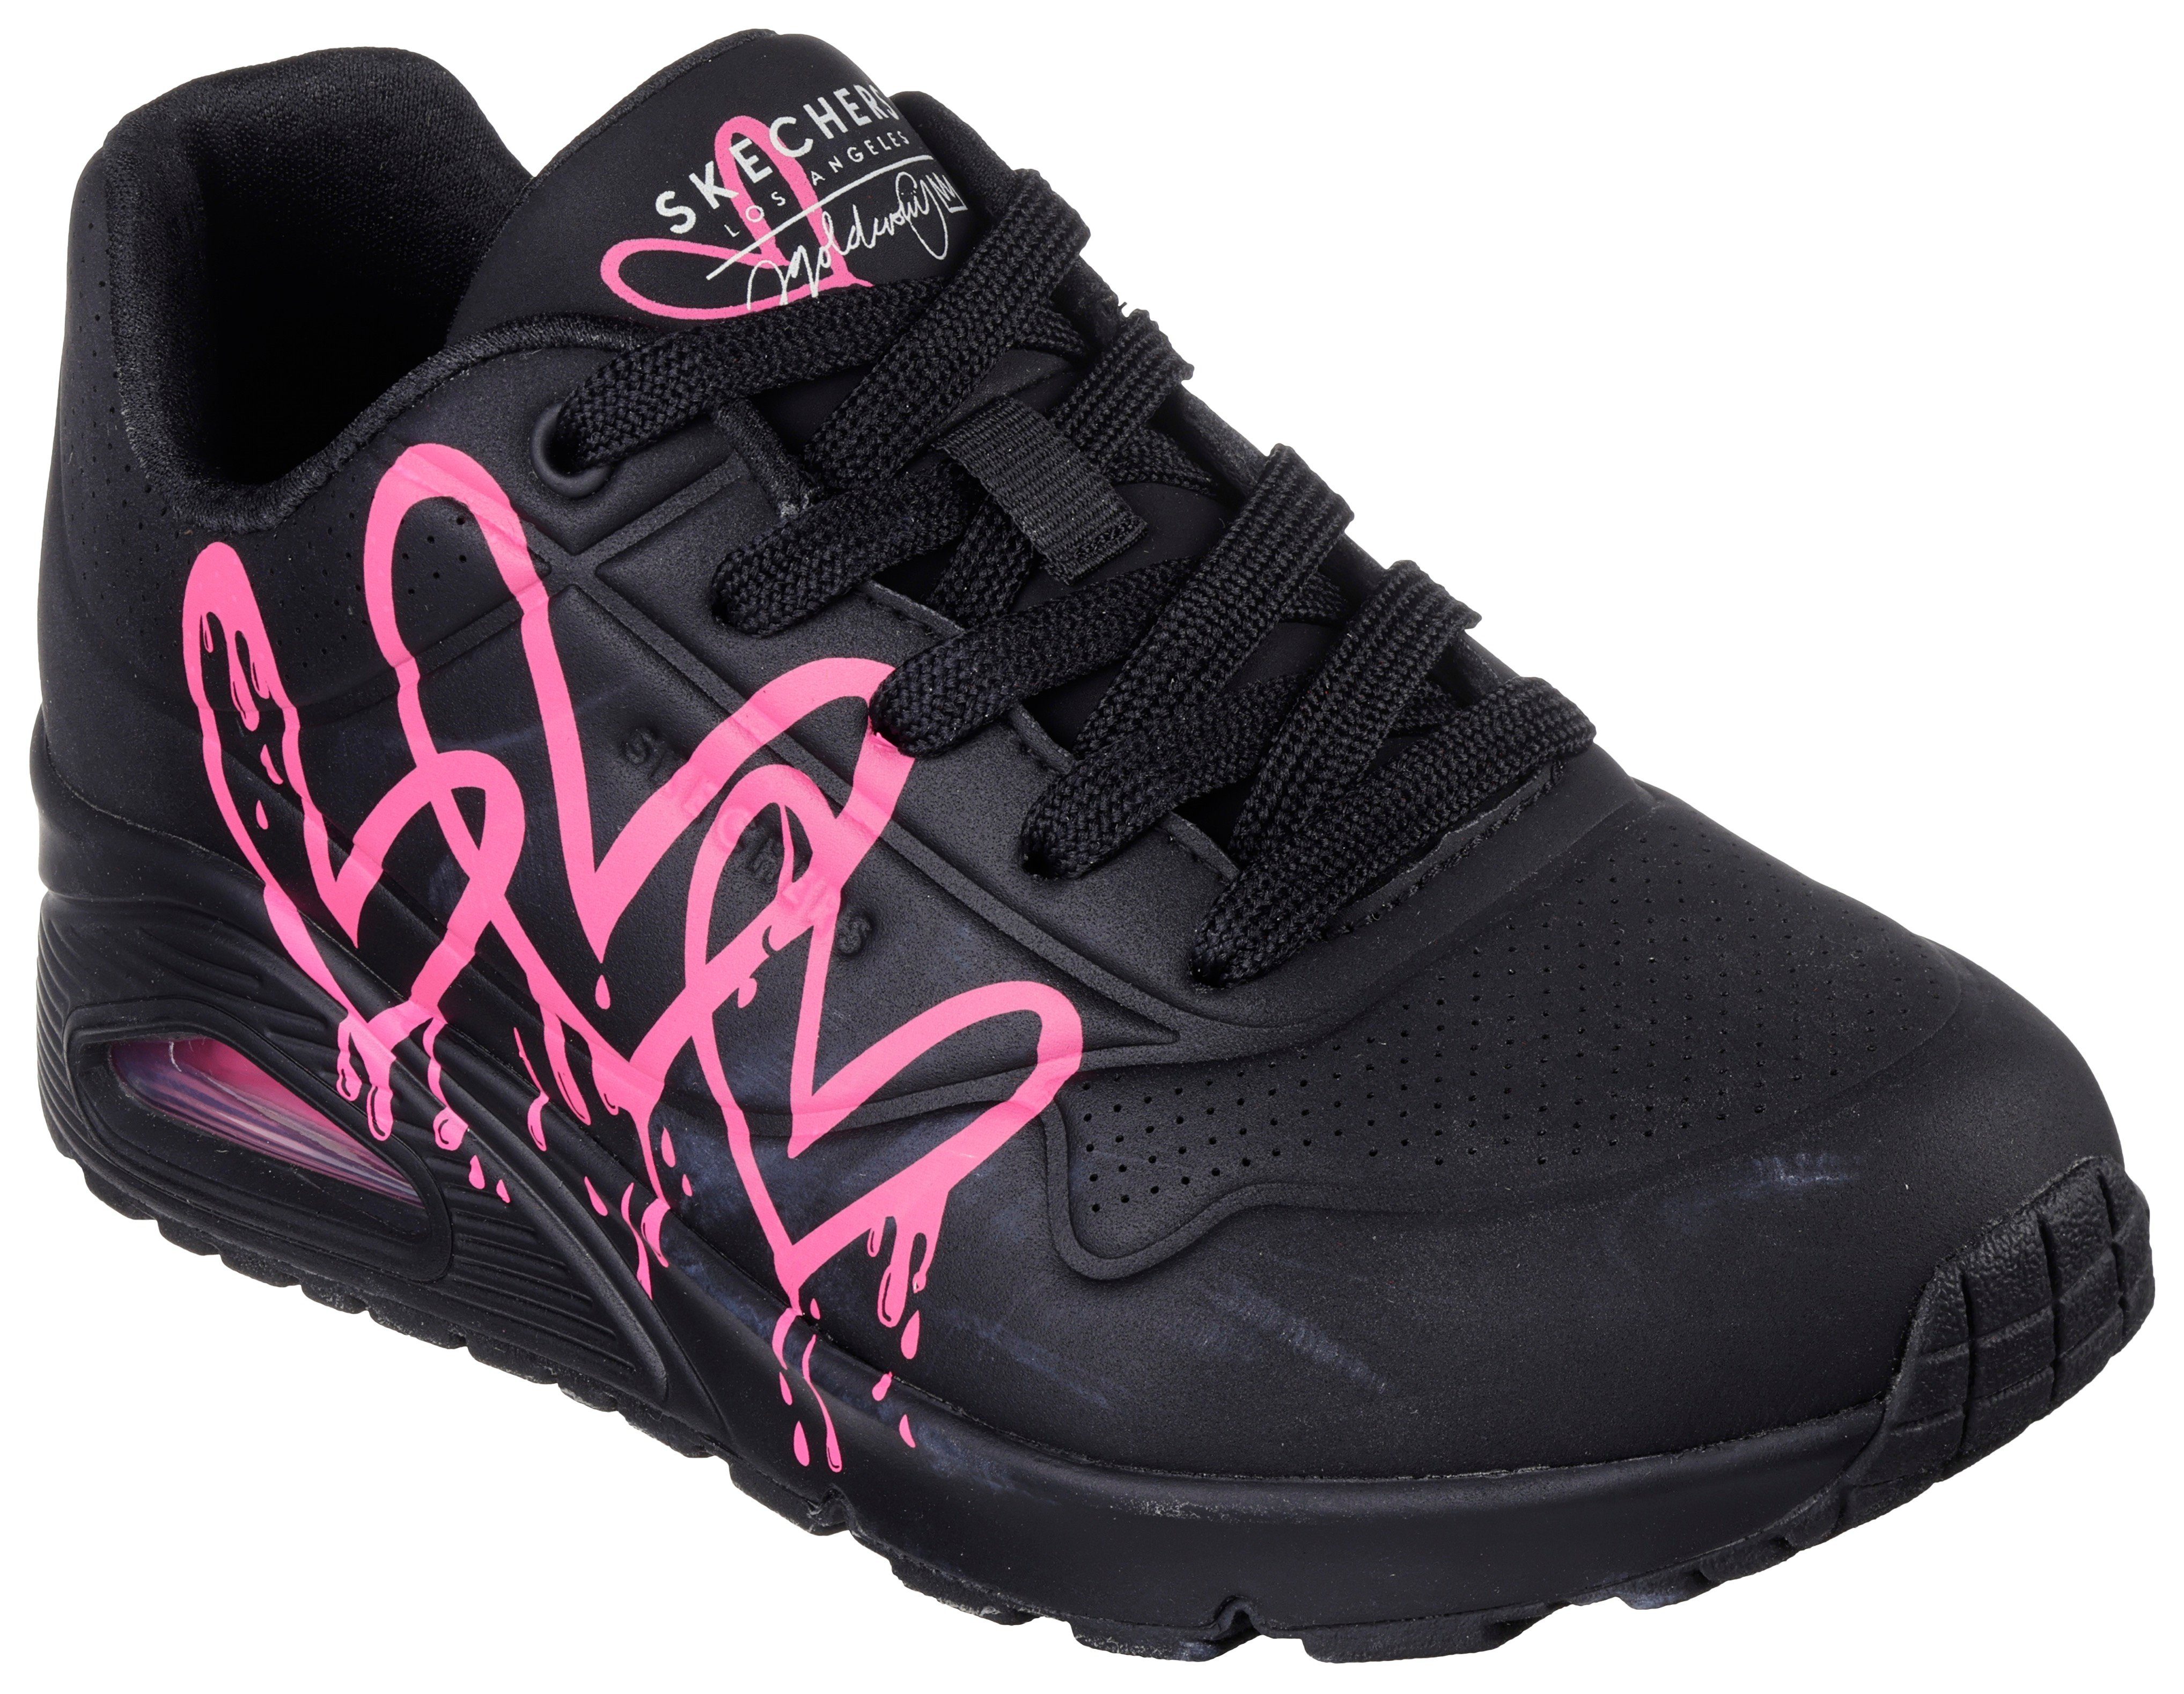 IN LOVE Herzen-Graffity-Print Skechers DRIPPING schwarz-kombiniert mit UNO Sneaker